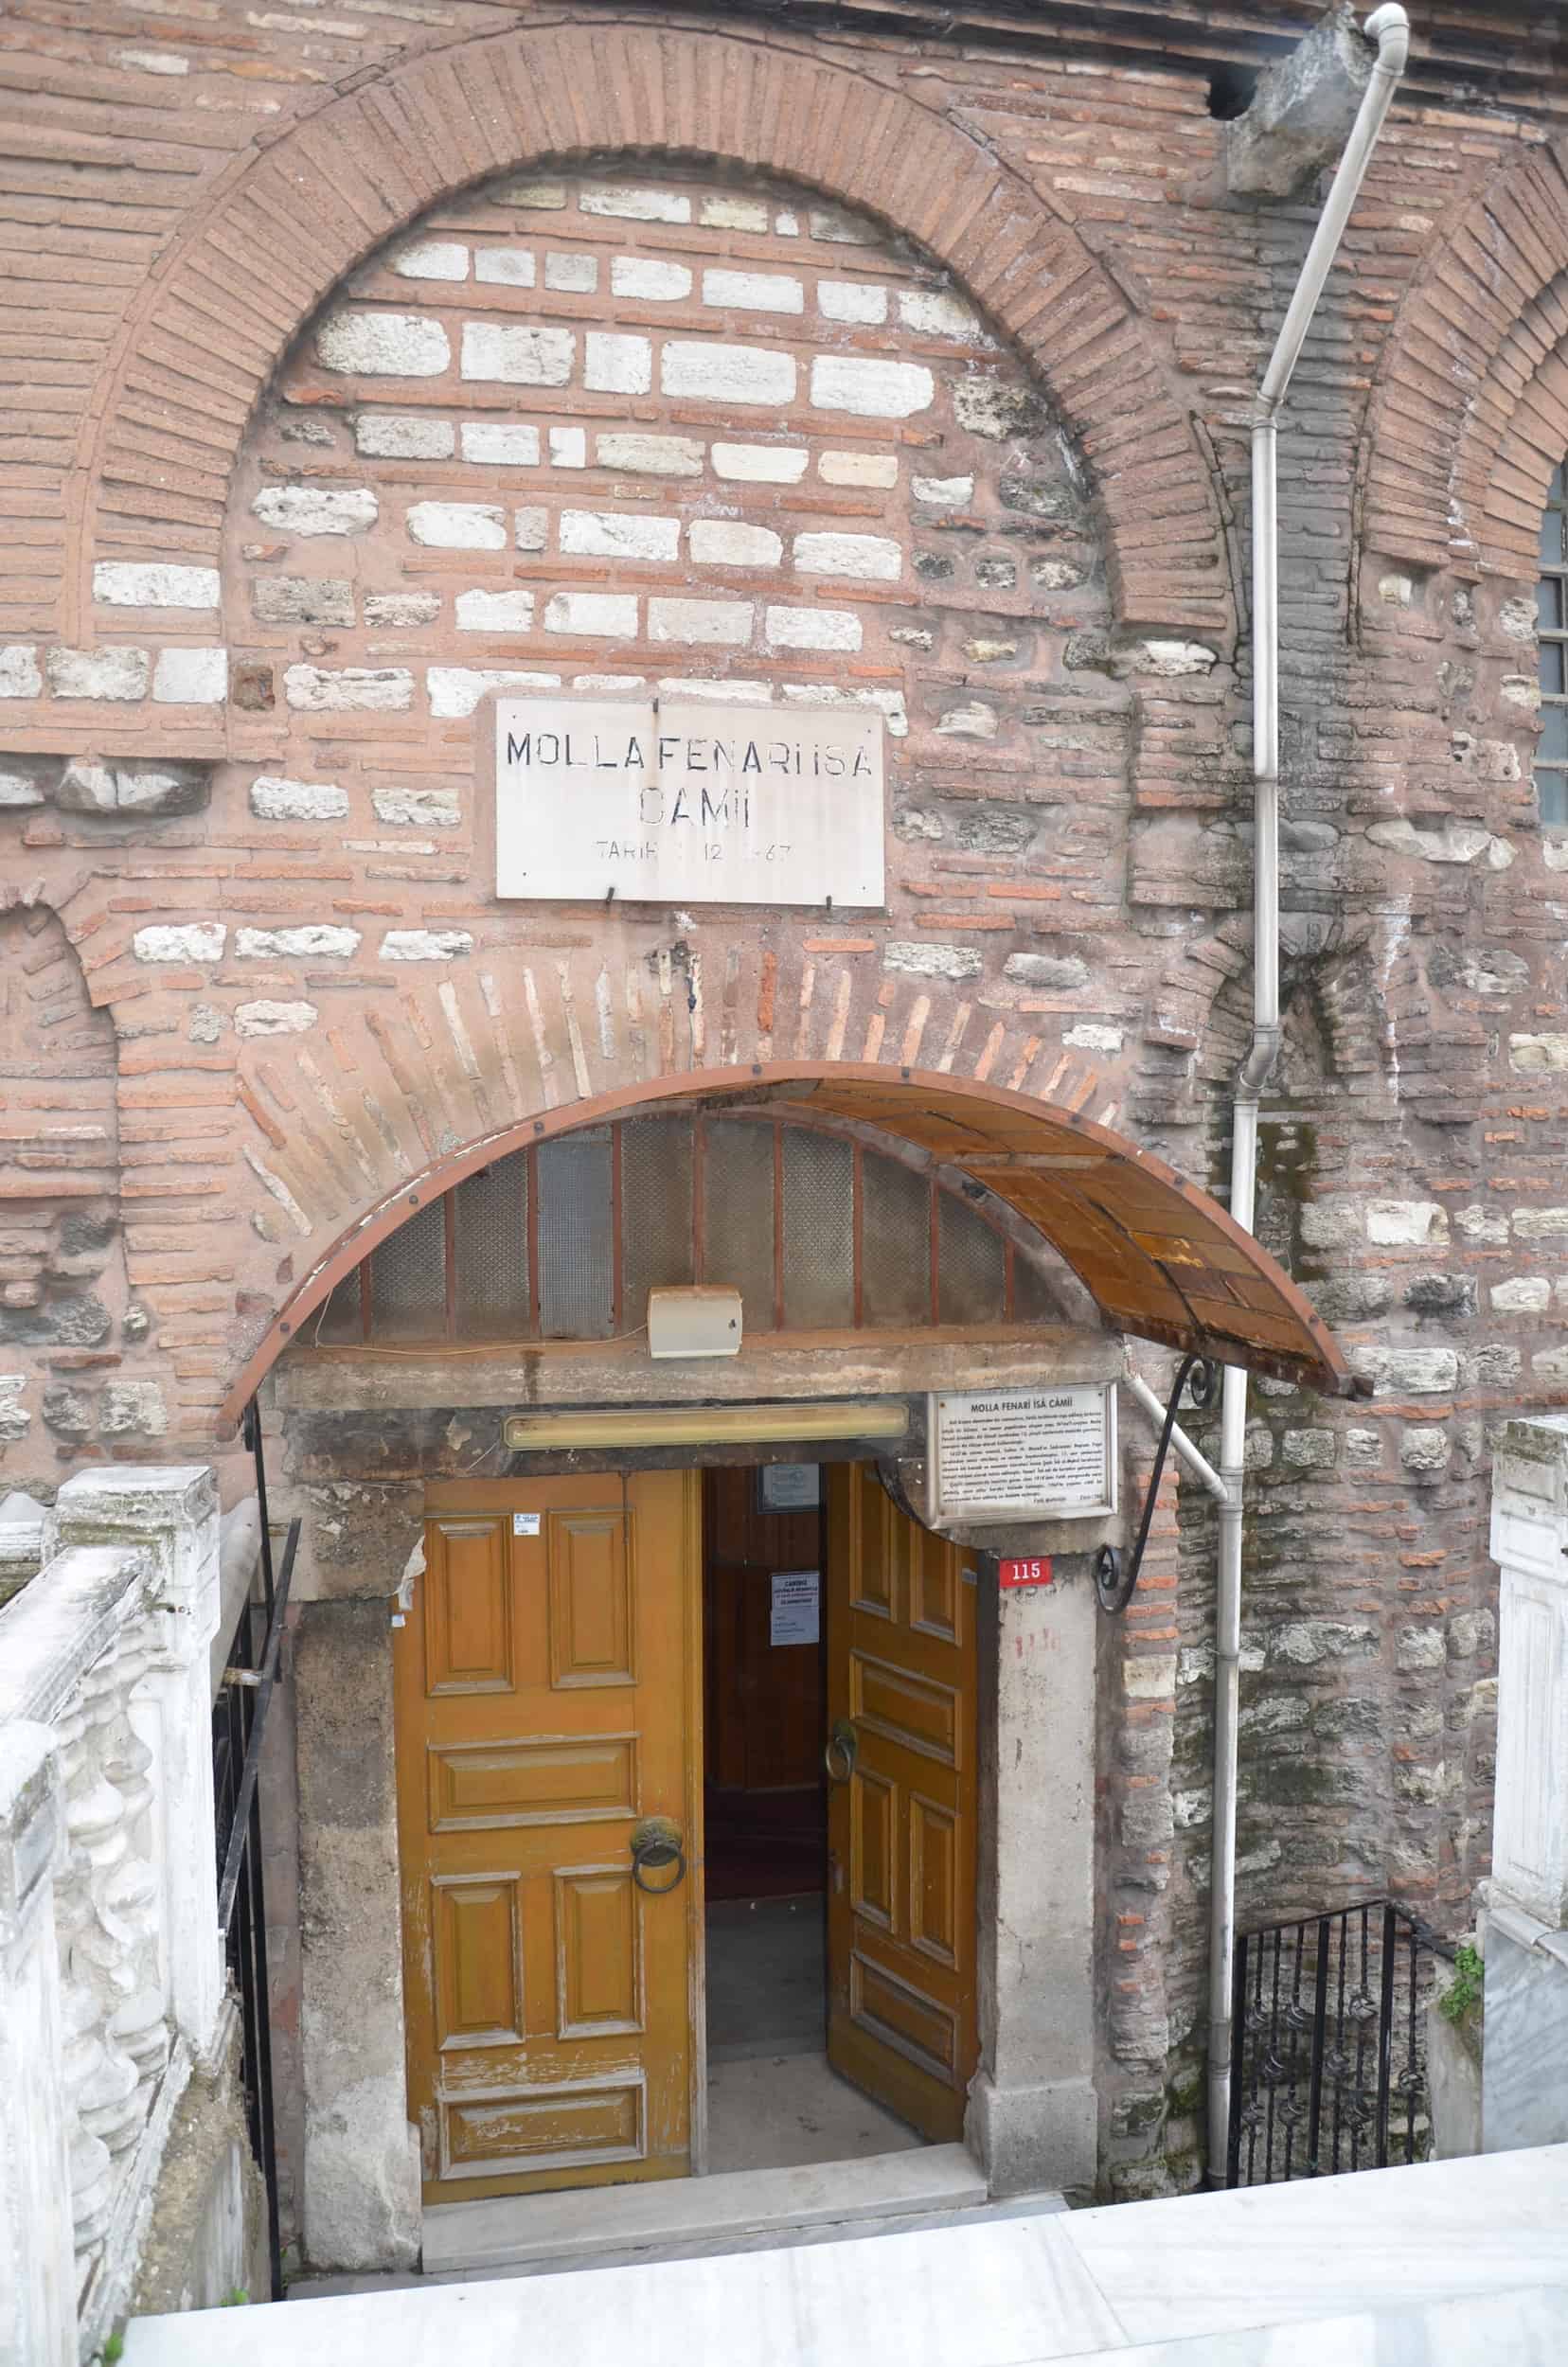 Entrance to the Molla Fenari Isa Mosque in Istanbul, Turkey